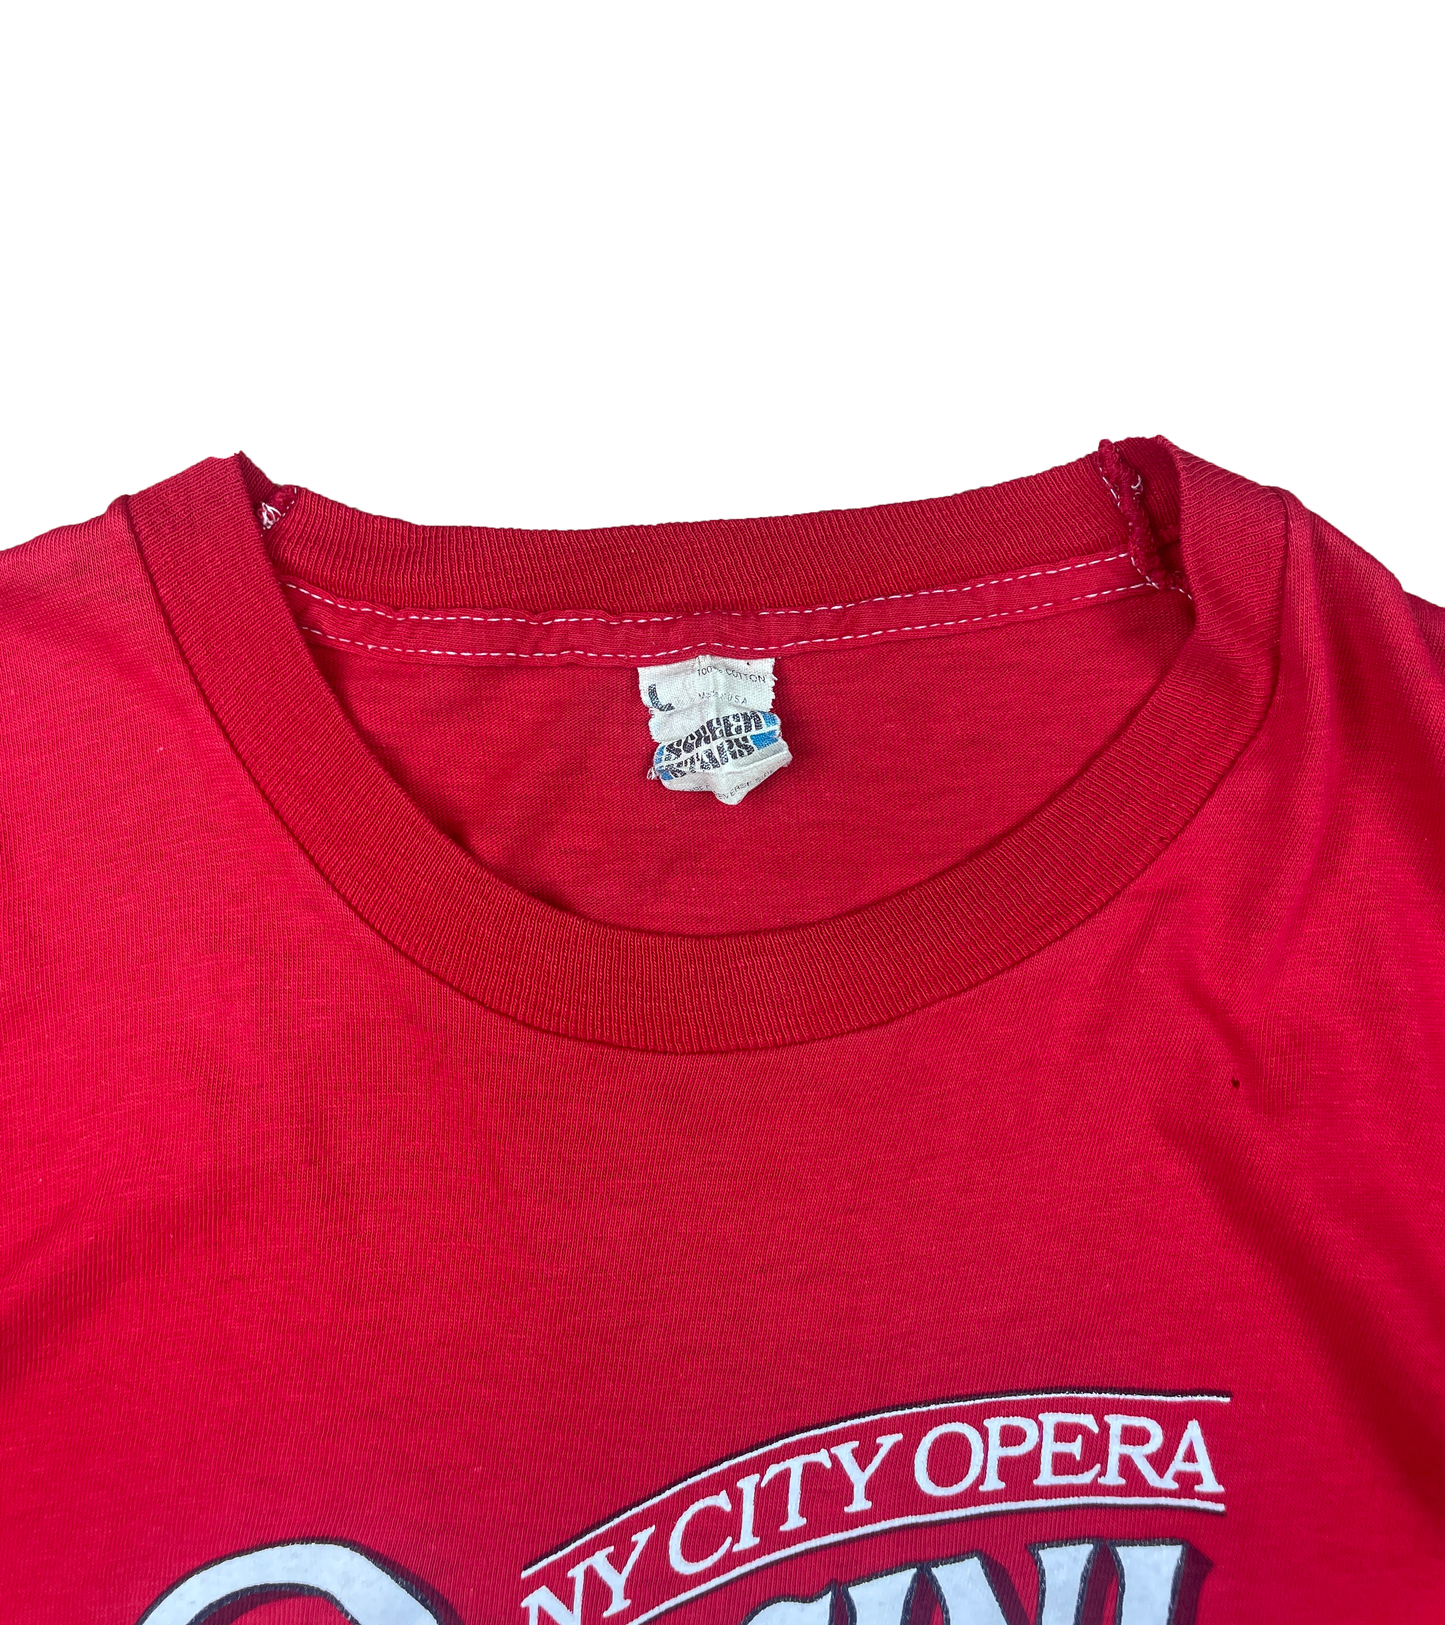 1983 NY City Opera Puccini Festival T-Shirt // L